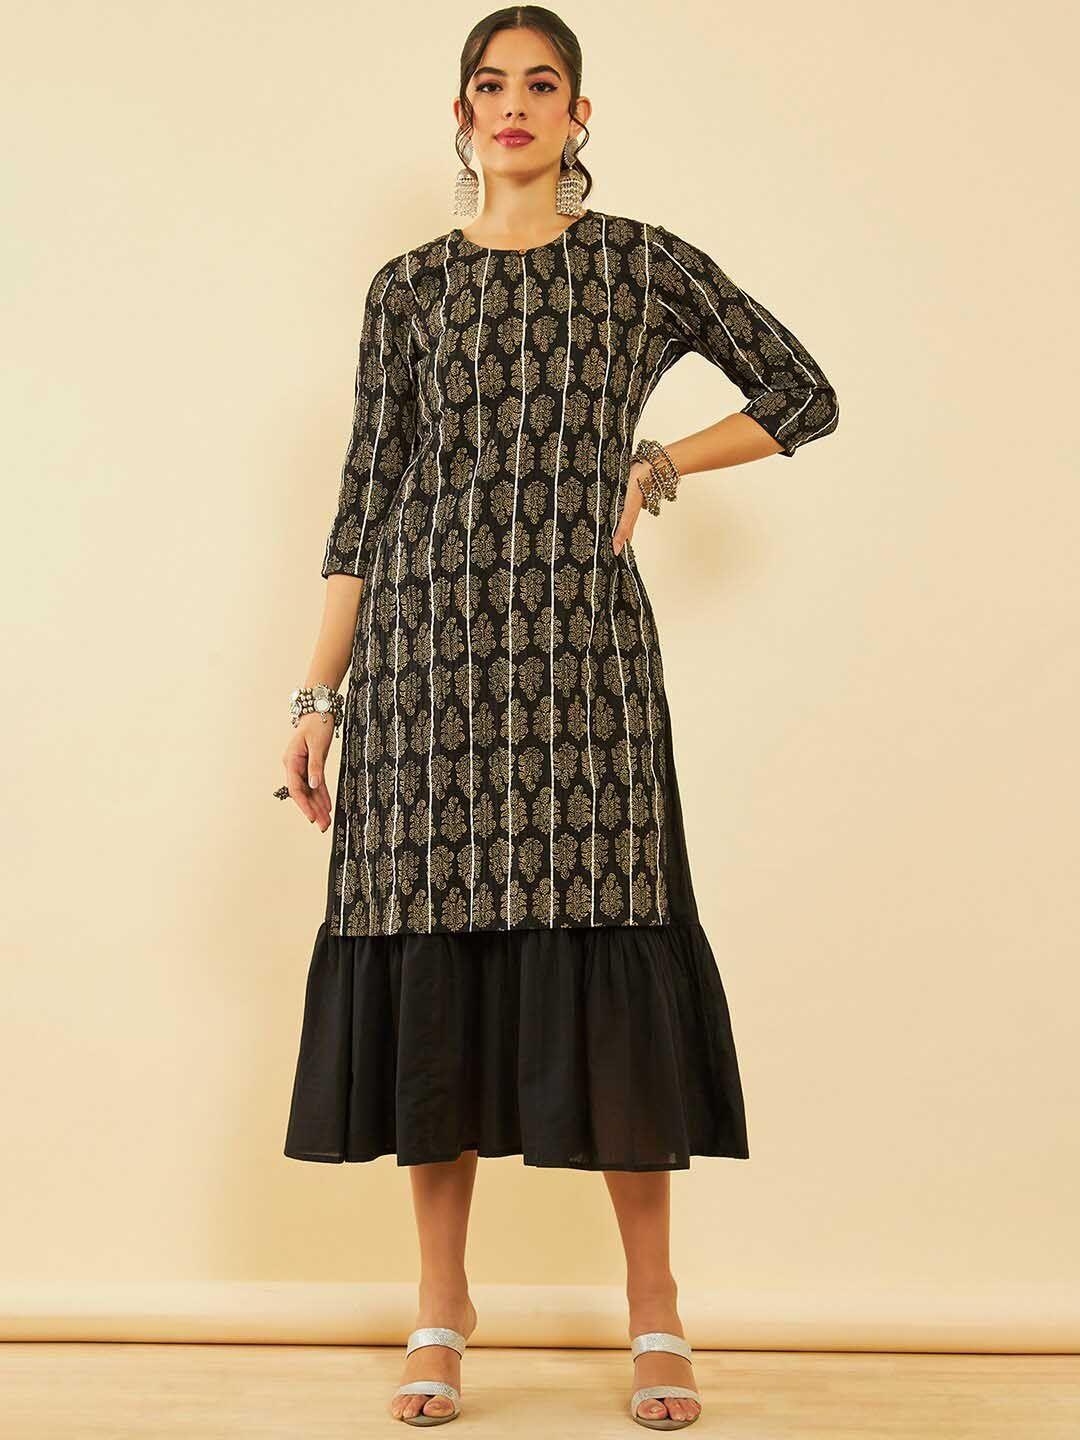 soch-ethnic-motifs-printed-cotton-ethnic-dresses